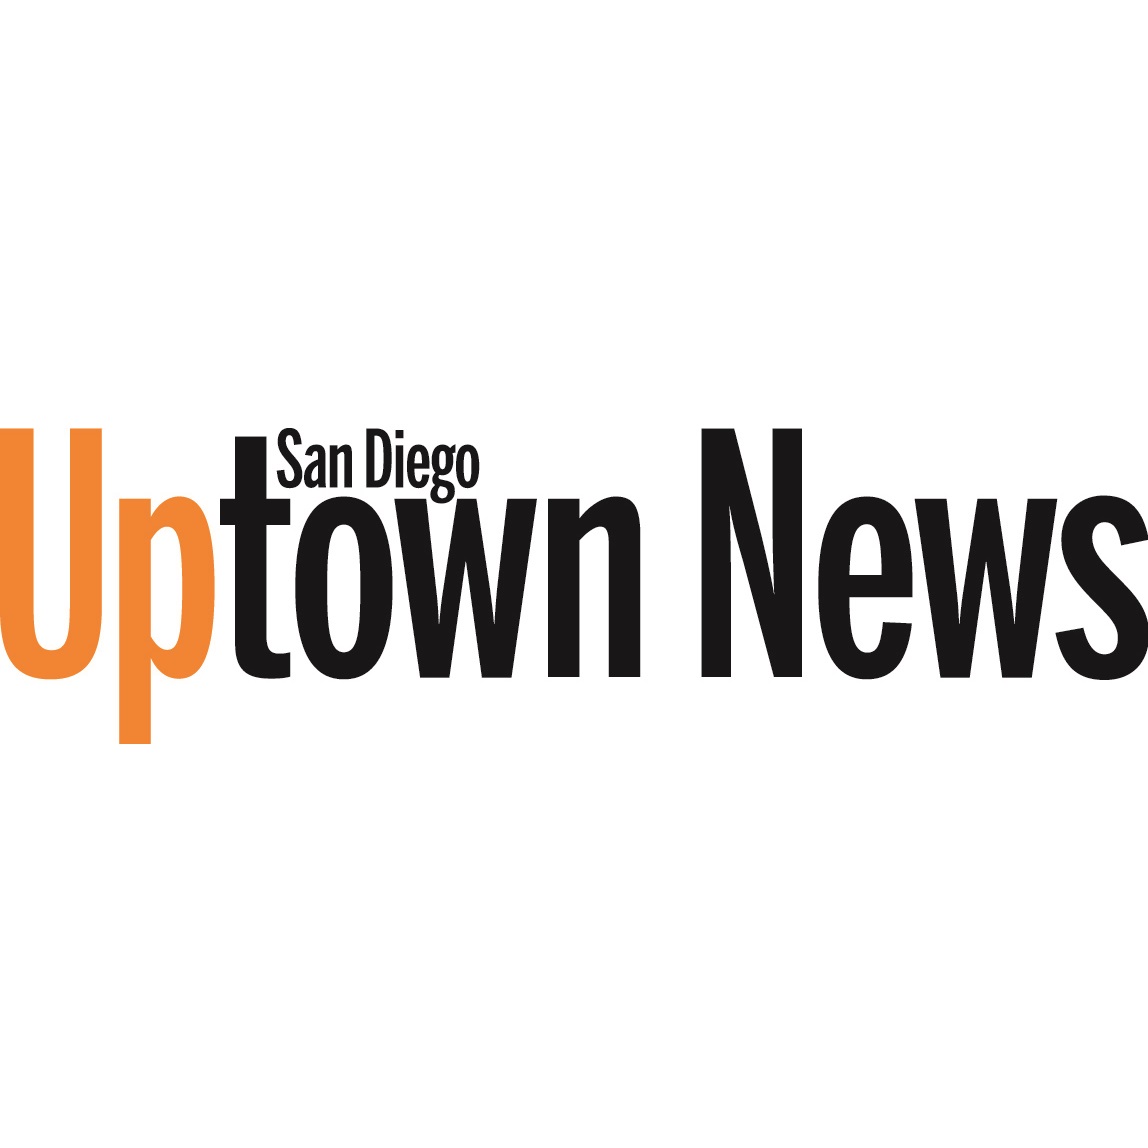 Uptown News